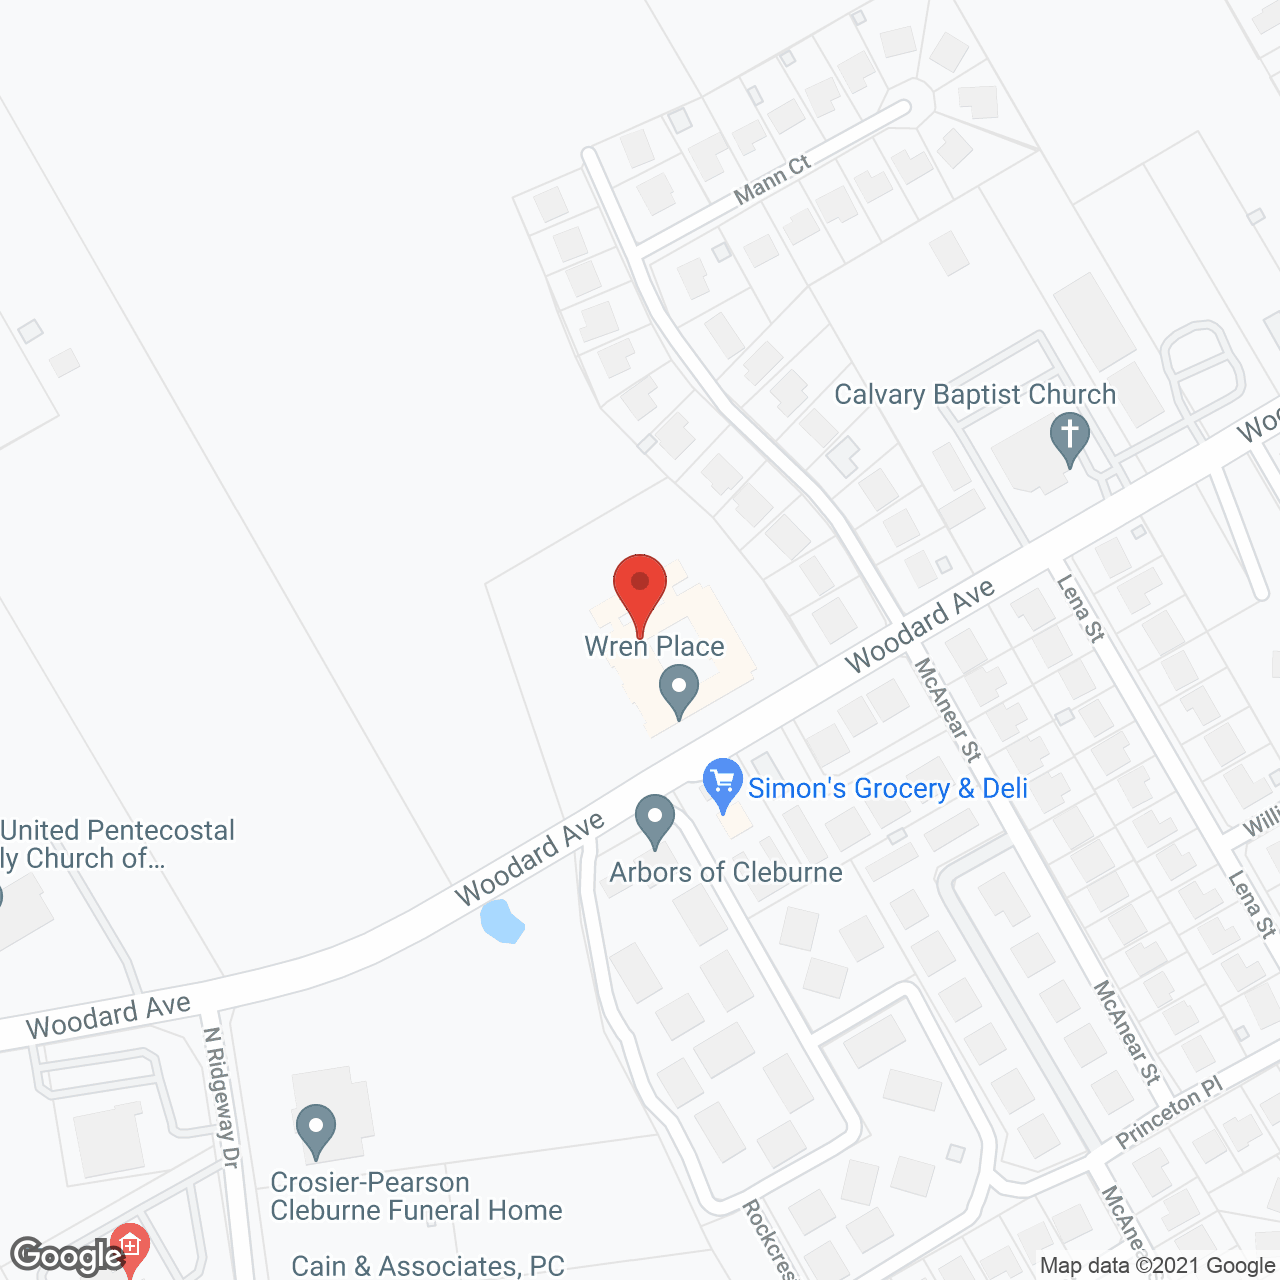 Wren Place in google map